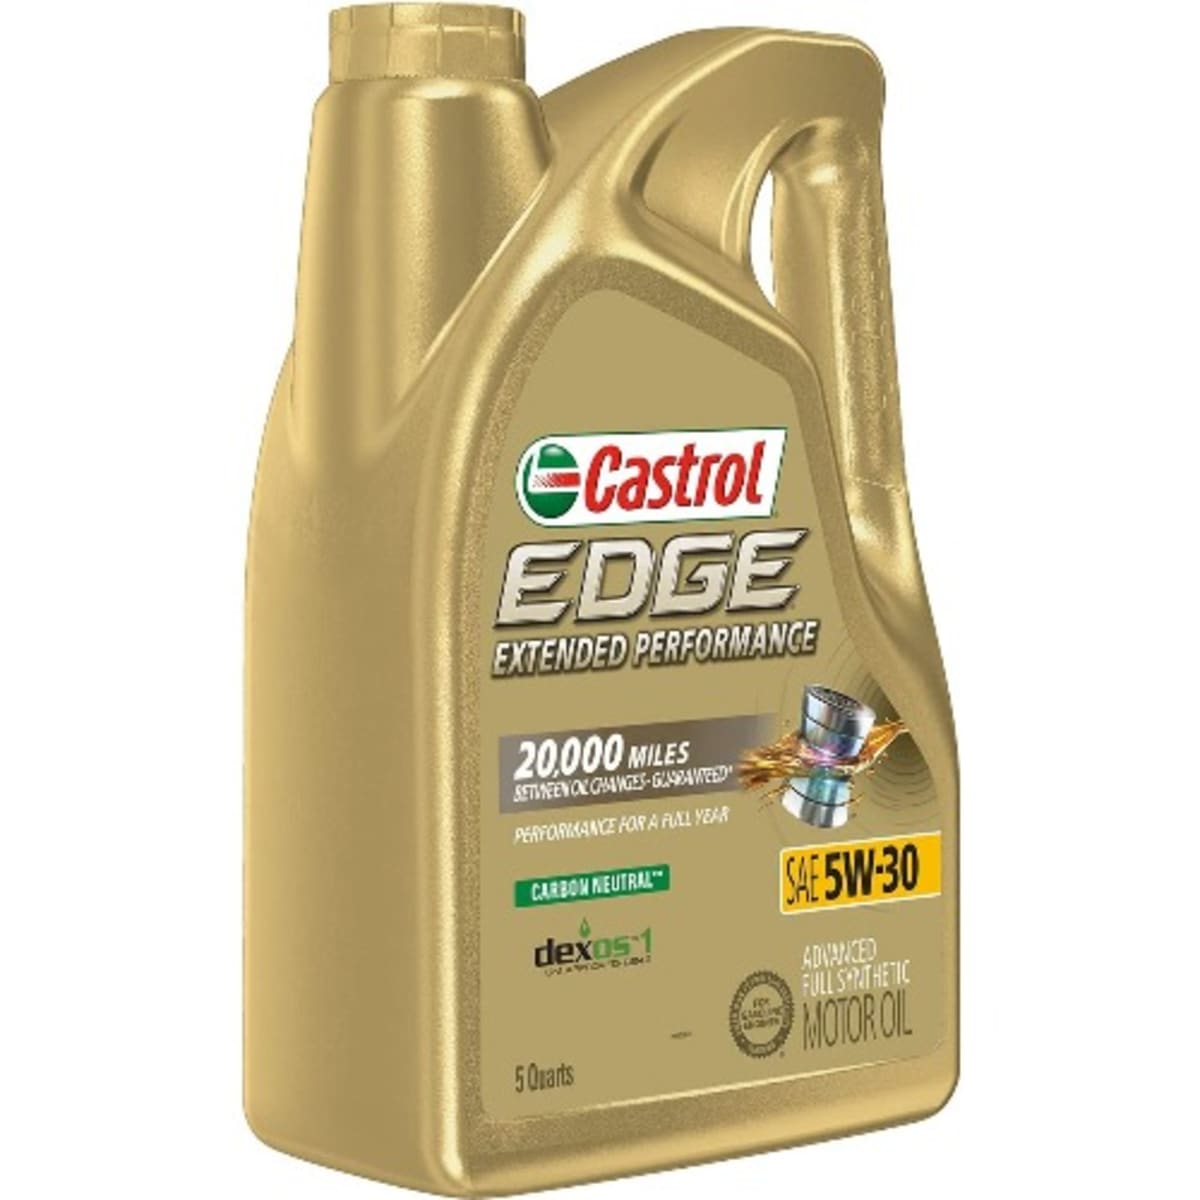 Castrol Edge 5W-30 Advanced Full Synthetic Motor Oil, 5 Quarts